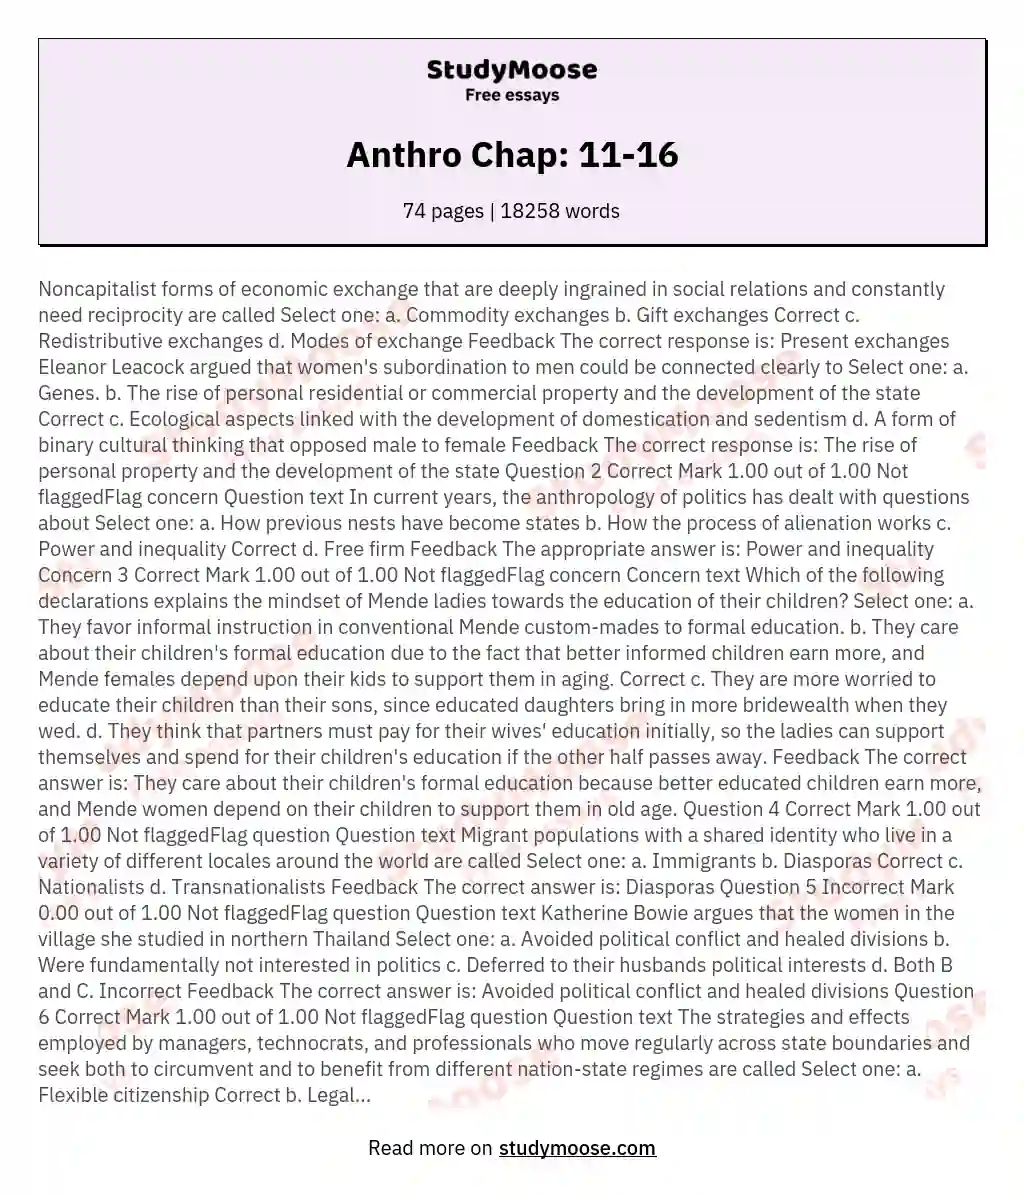 Anthro Chap: 11-16 essay